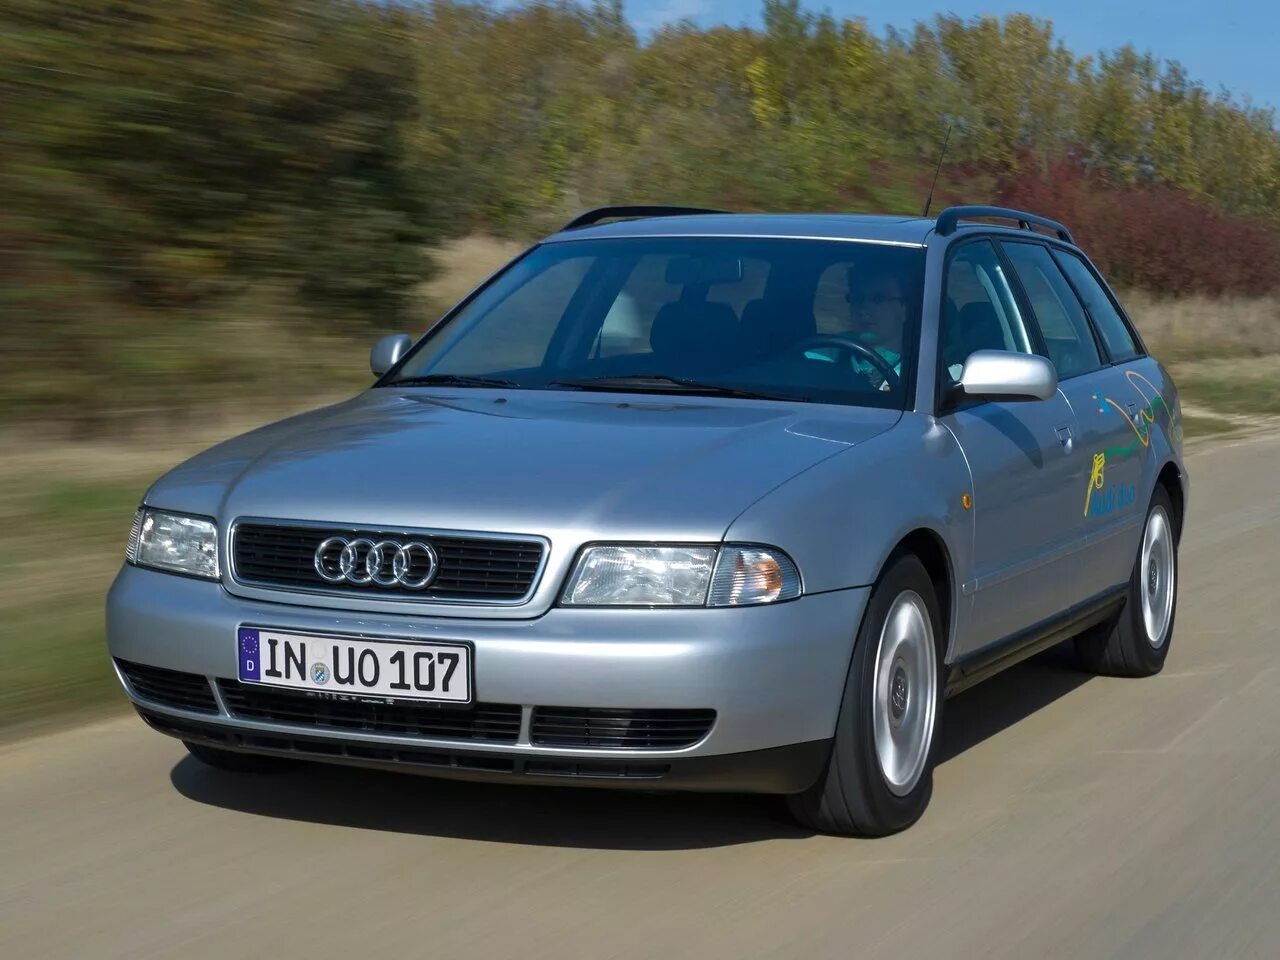 Audi a4 b5 универсал. Audi a4 b5 2000. Audi a4 b5 1994. Audi a4 b5 1996. Купить ауди а4 в5